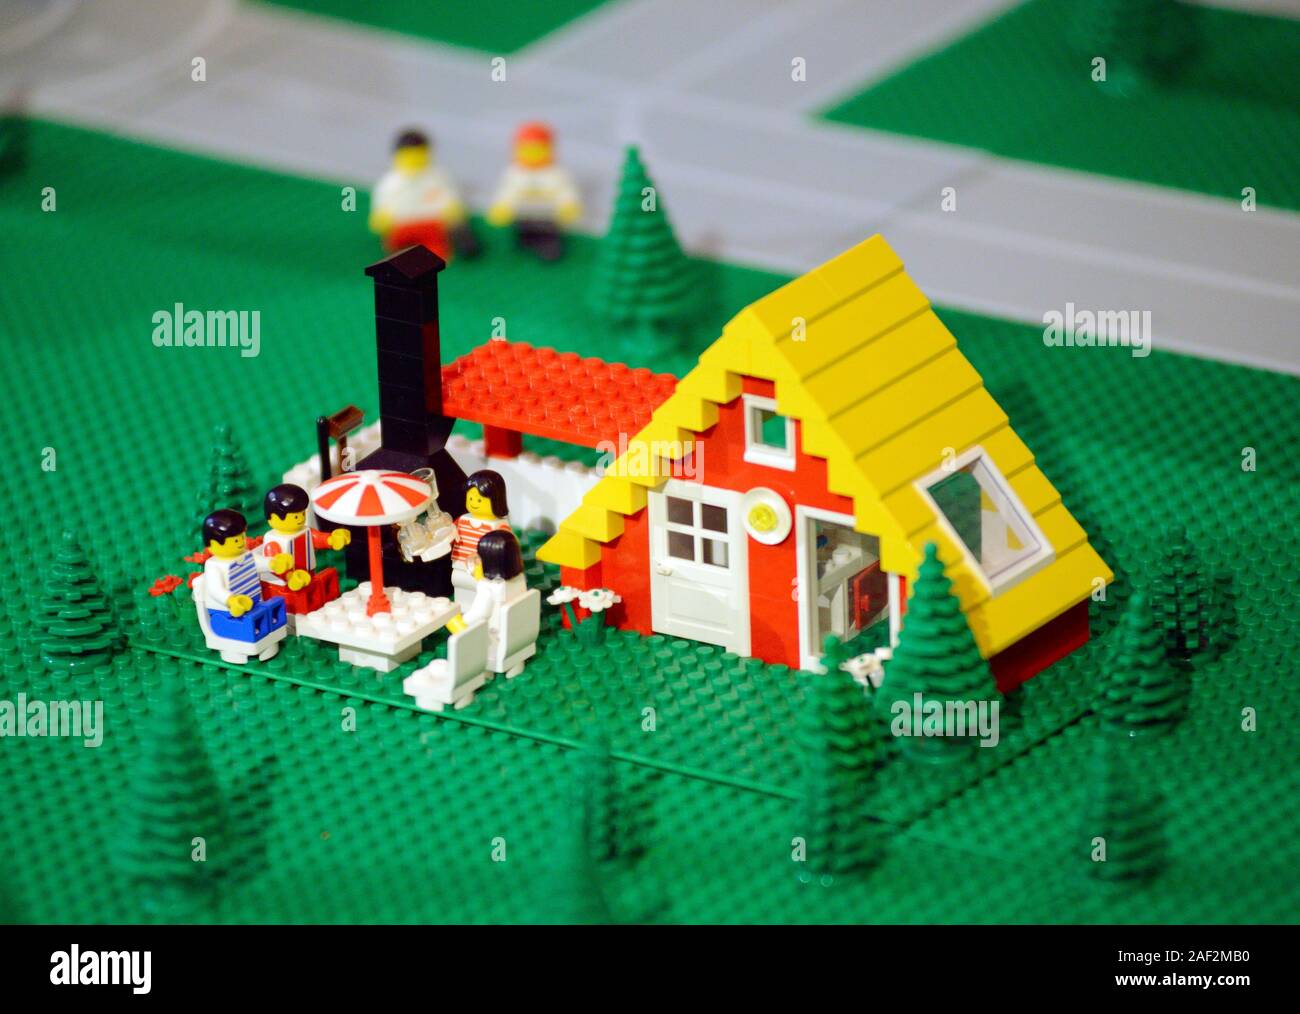 House of Plastic Block Toys Stock Photo